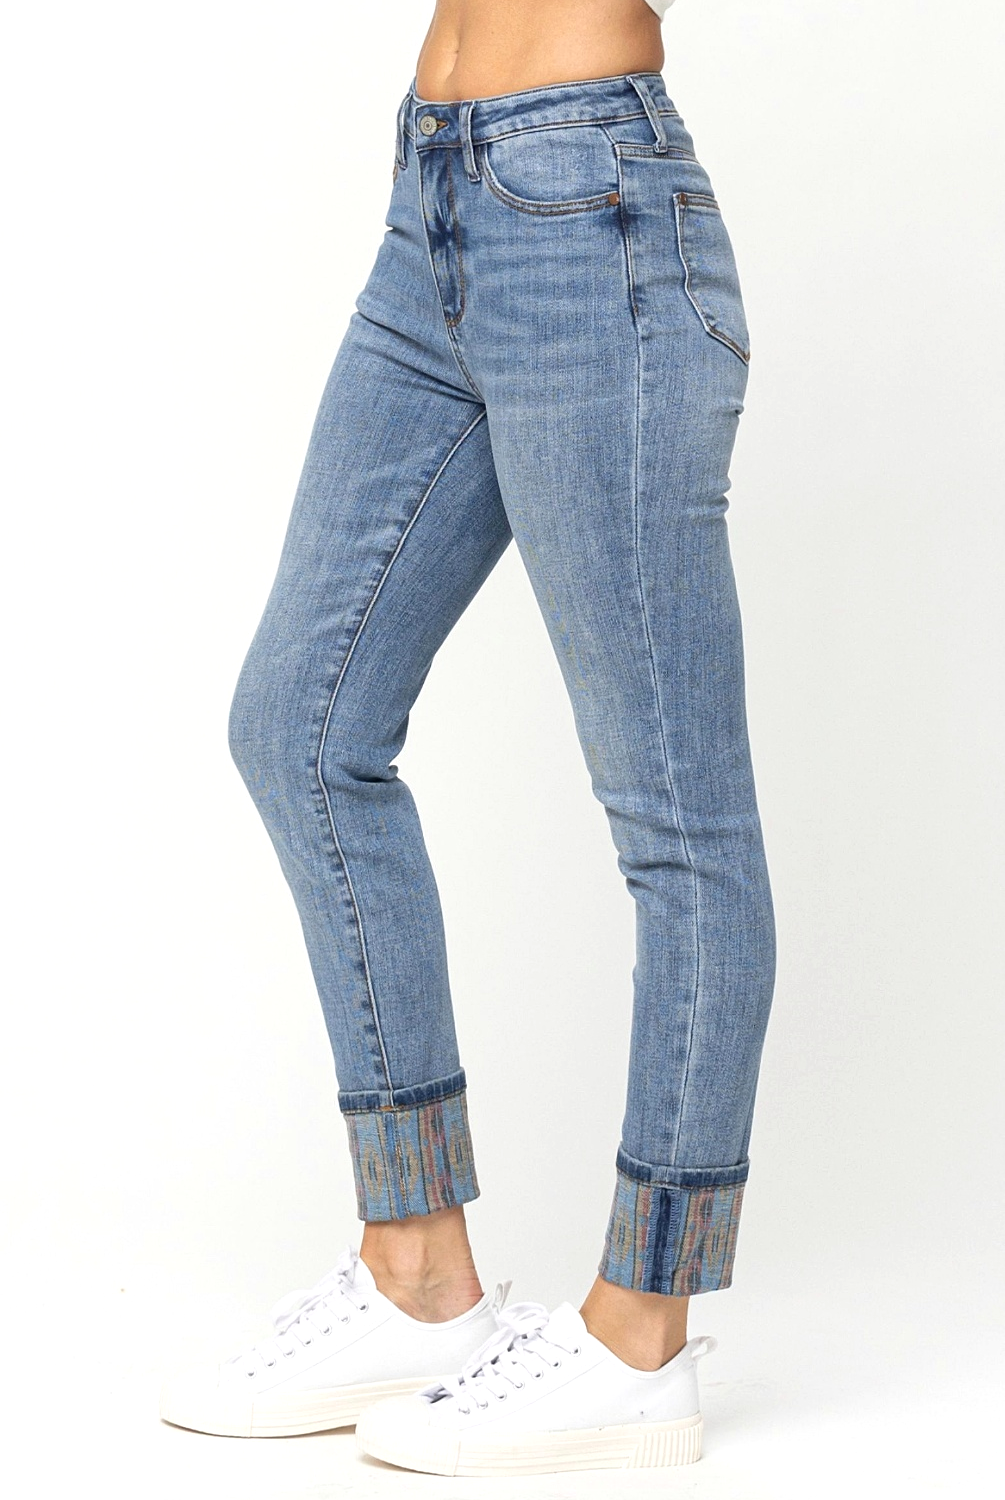 New Judy Blue Tummy Control jeans! #judybluedenim #tummycontroljeans #